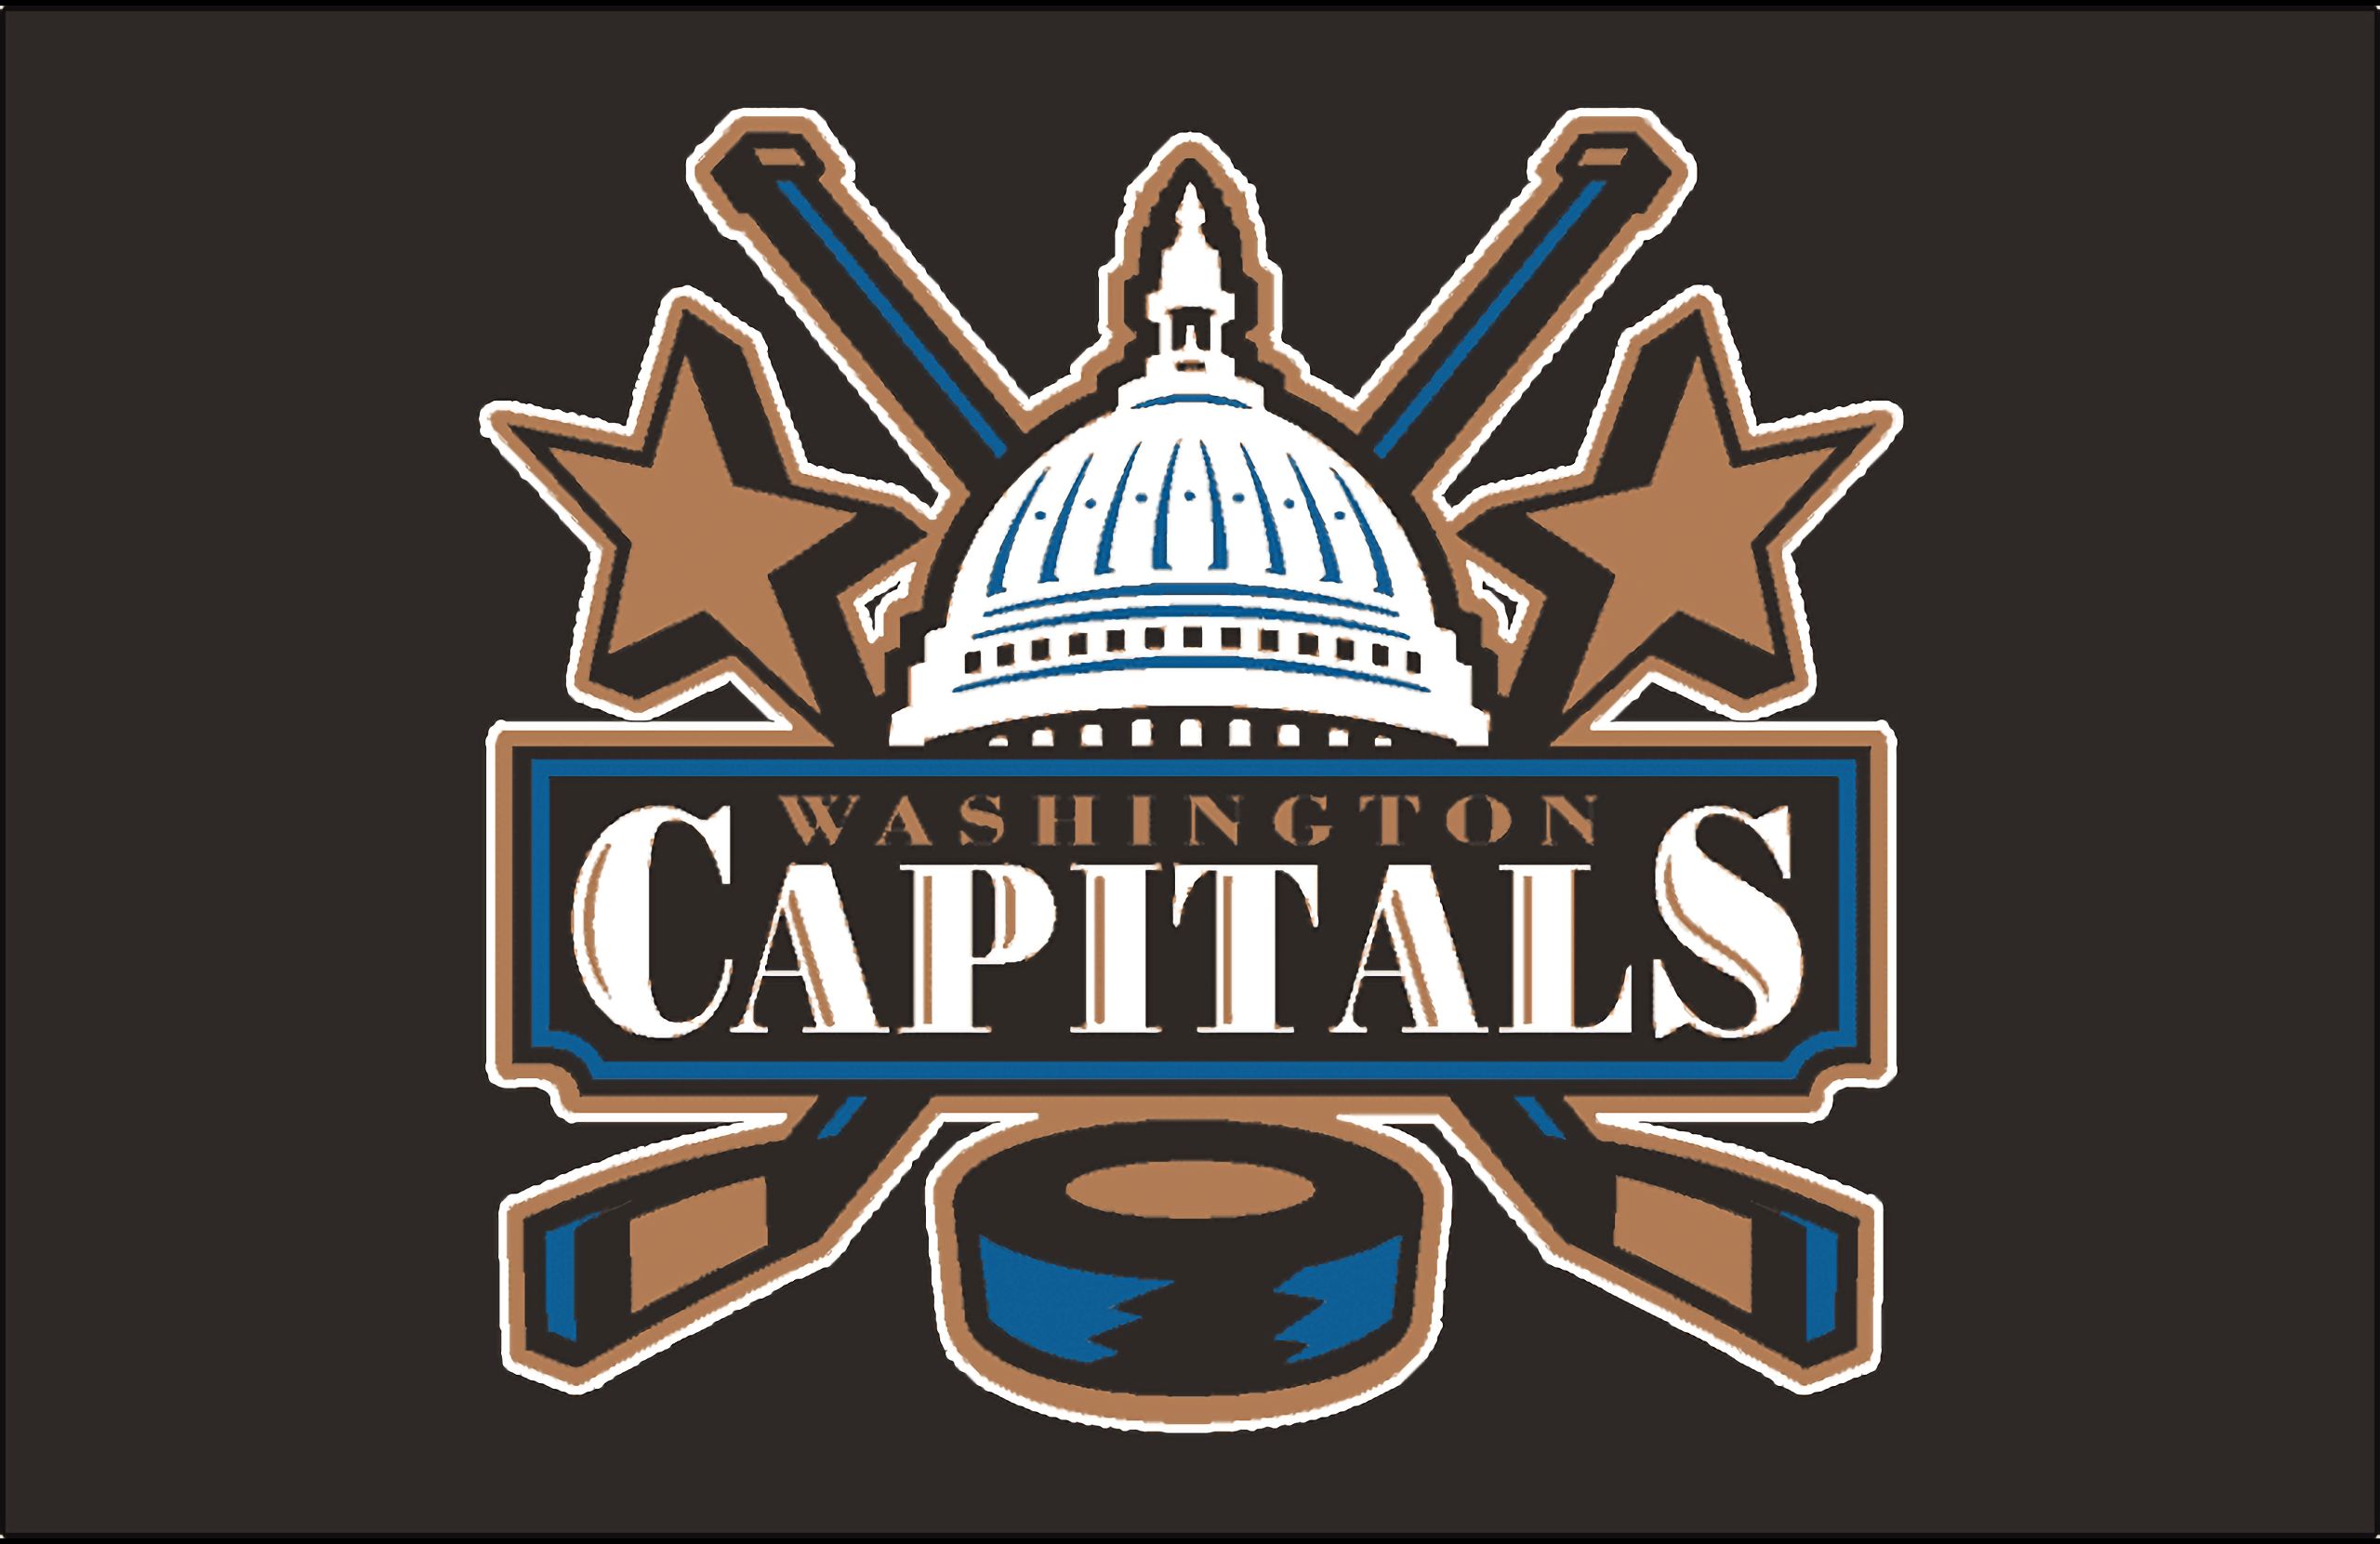 Washington Capitals Wallpaper APK for Android Download